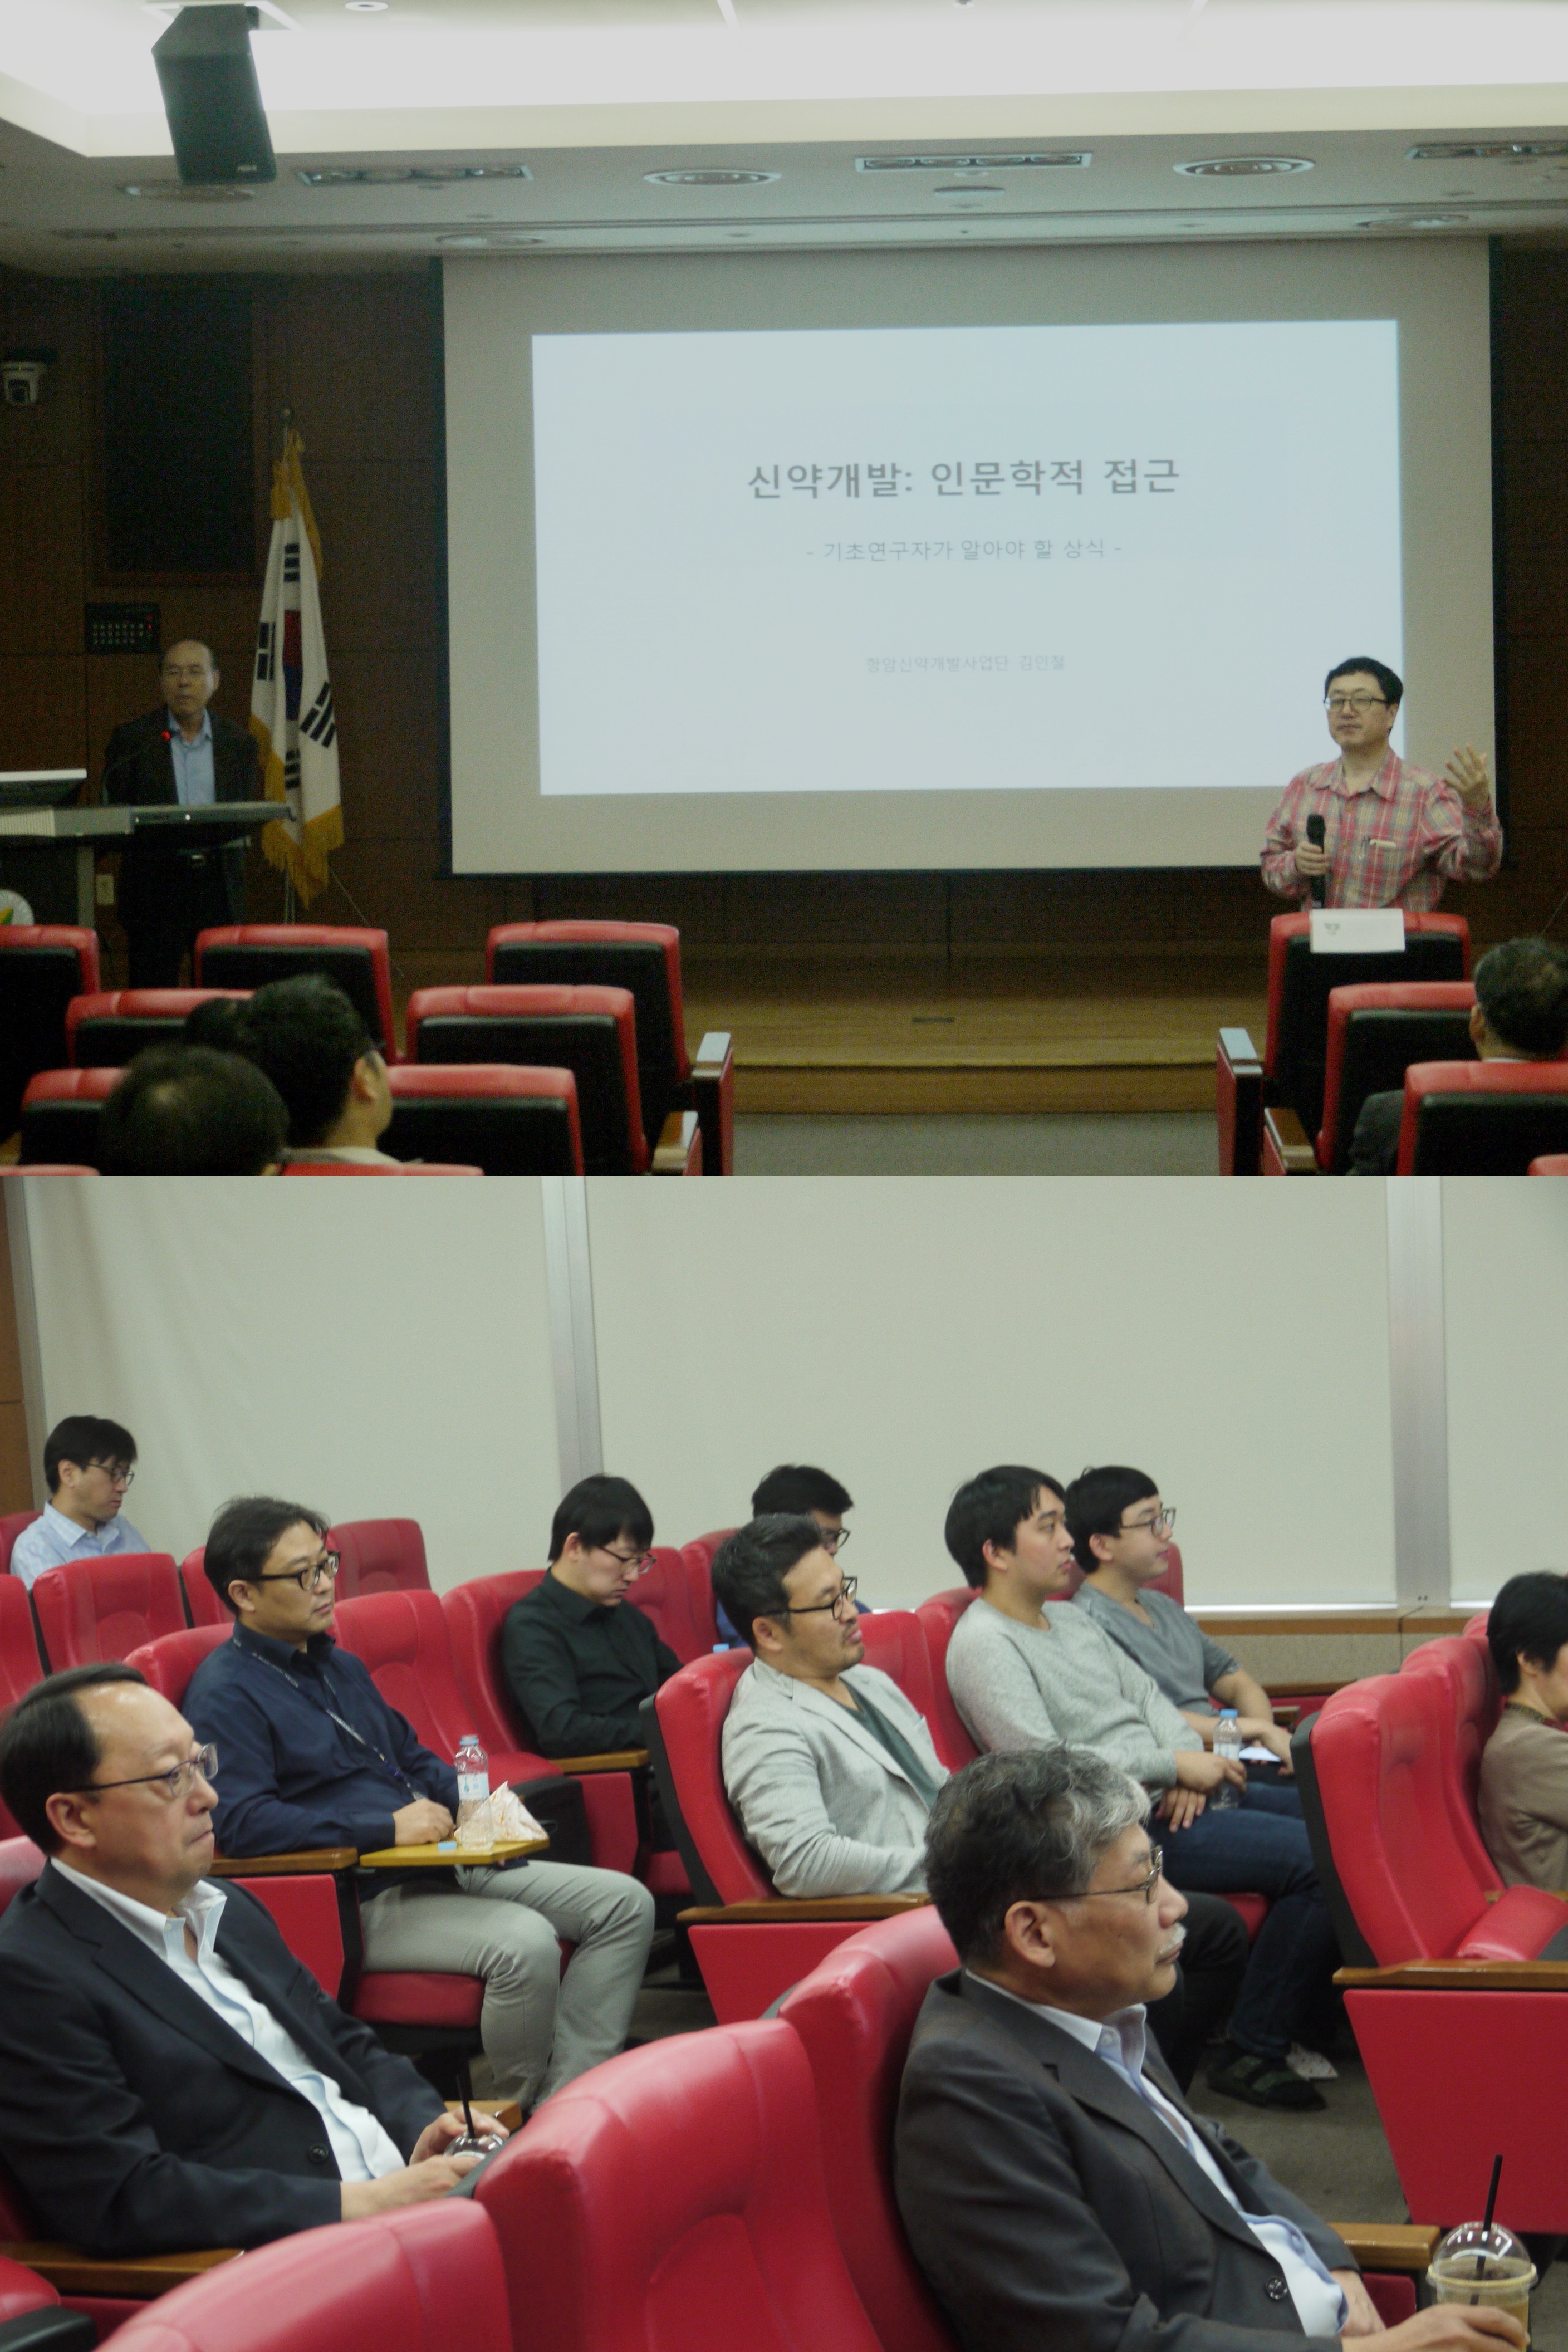 Photo of In-Hoo Kim, Dean of Graduate School, introducing Kim In-Chul, an external speaker